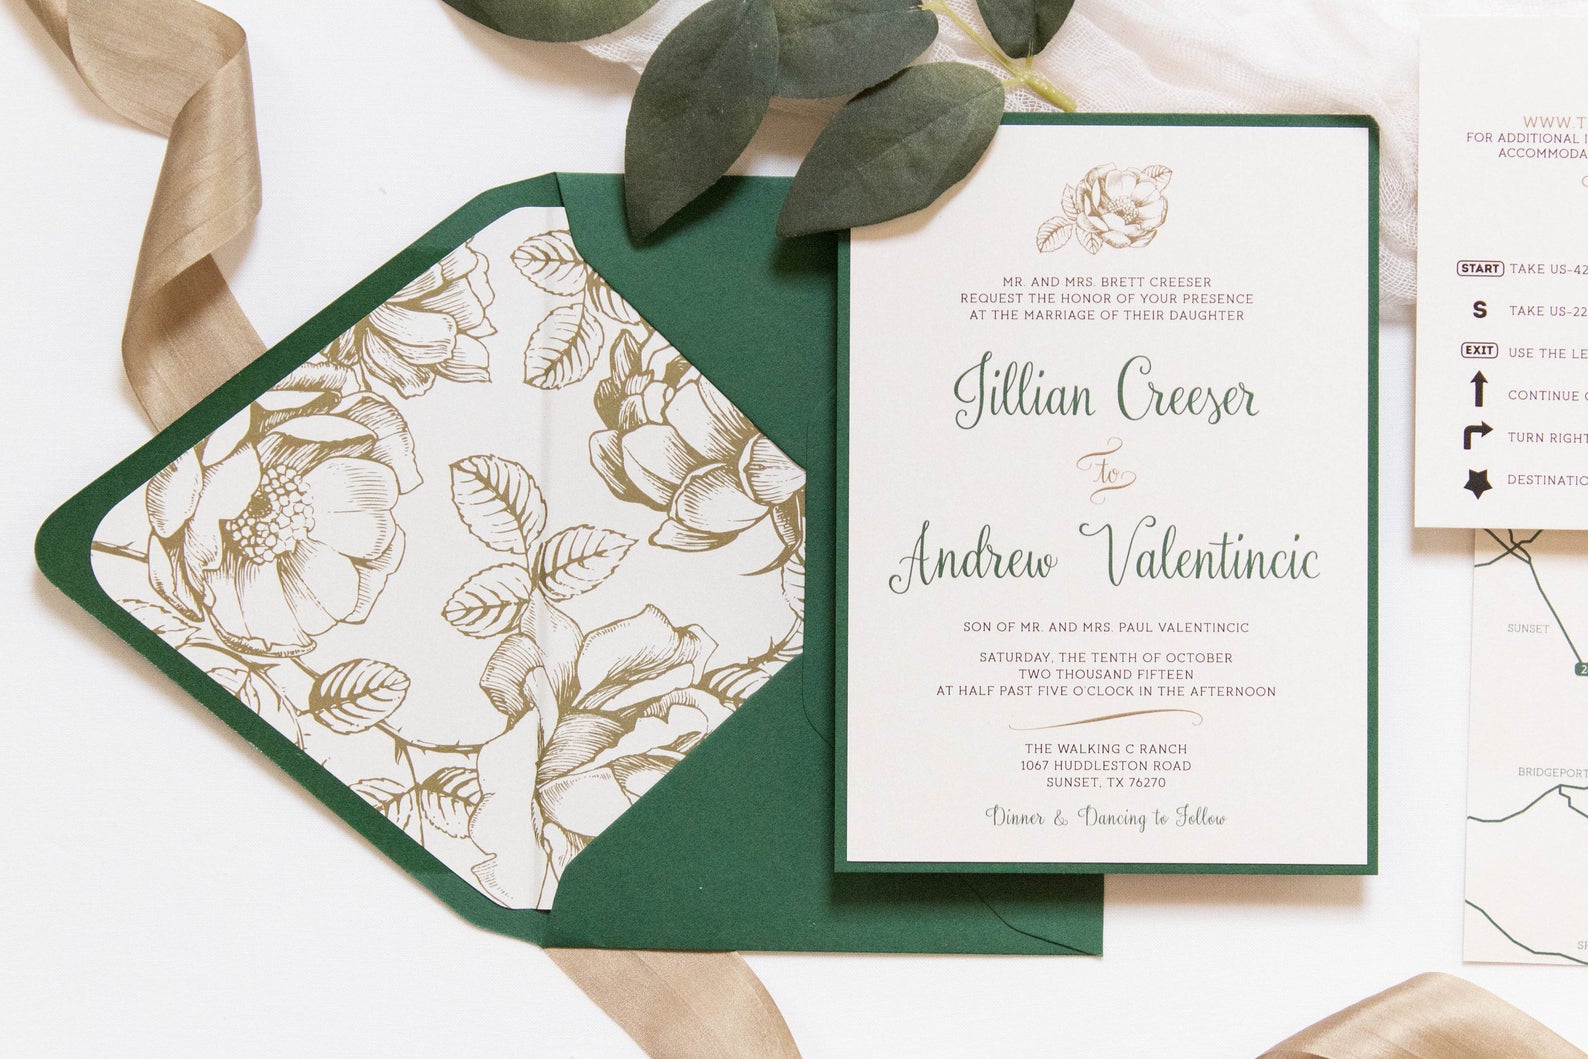 Brown Fox Creative wedding invitations